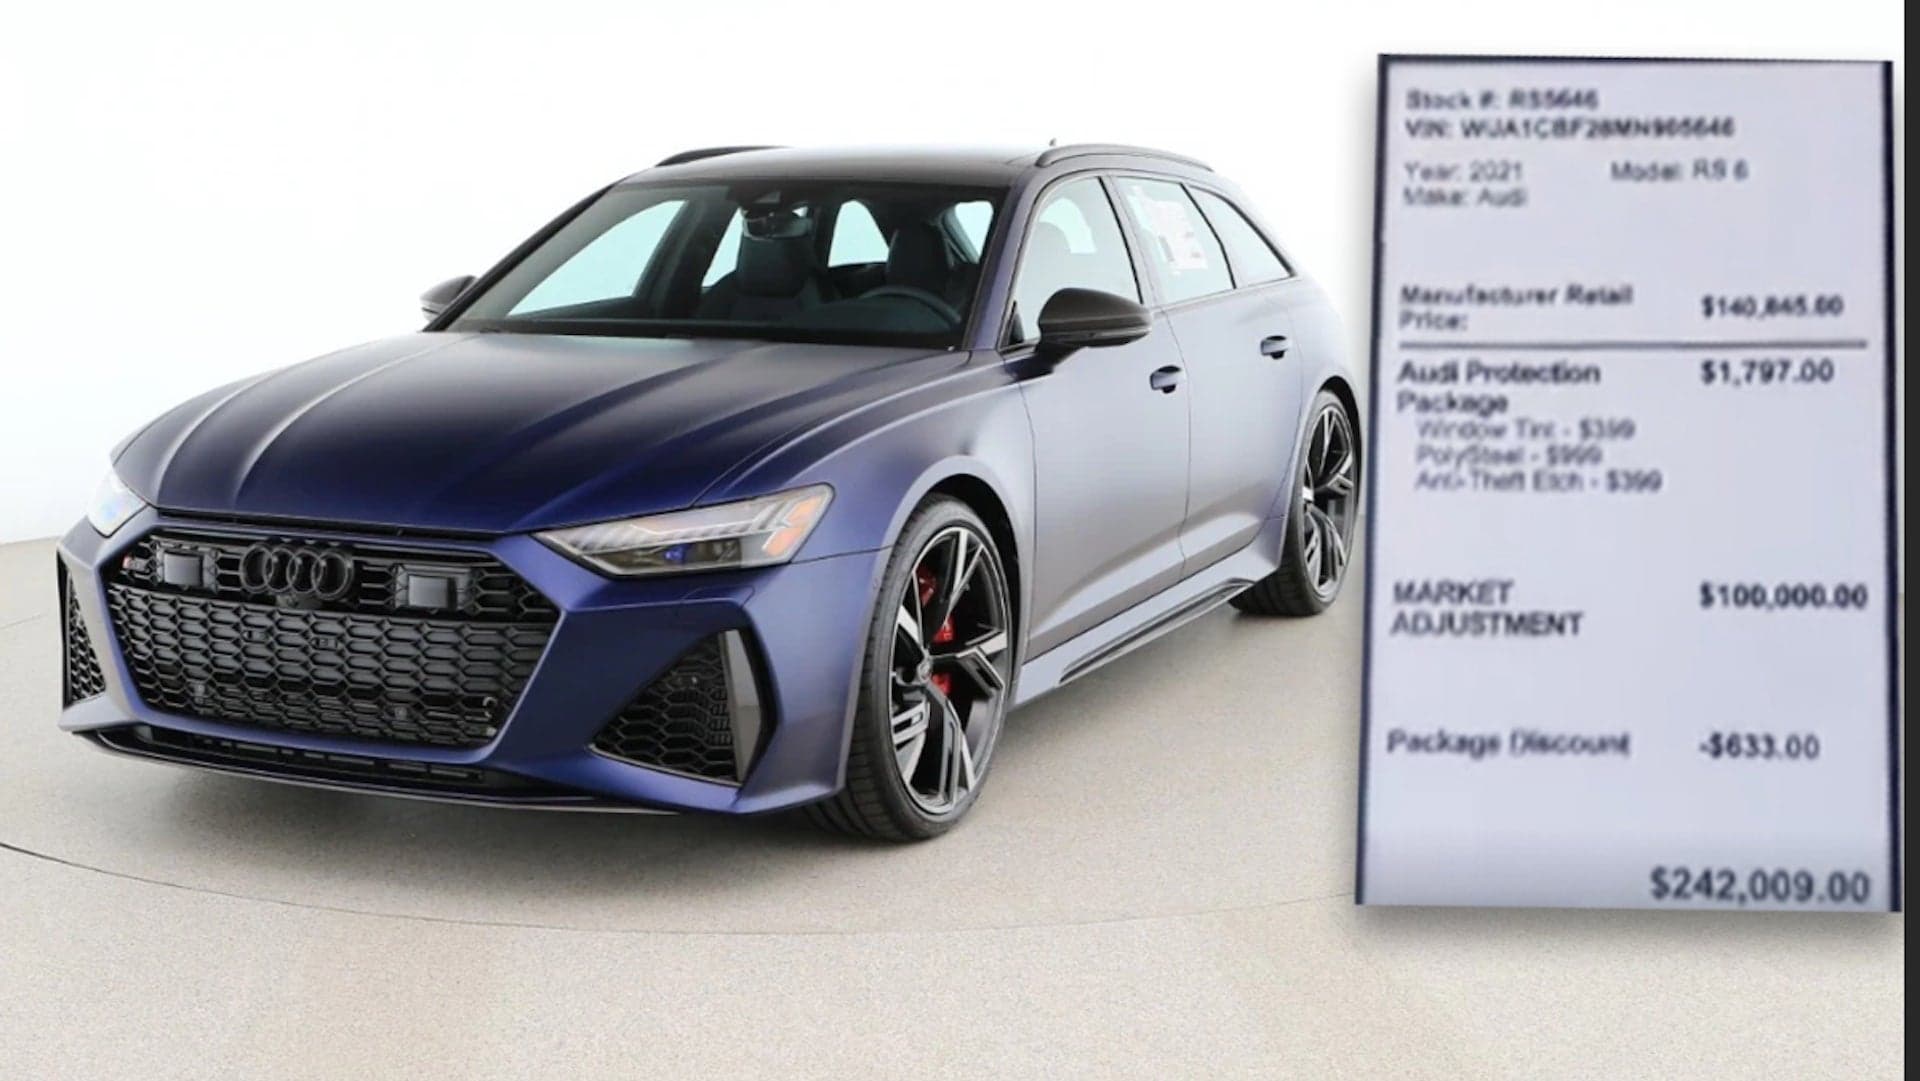 Audi Dealer Marks Up RS6 Avant $100,000 Over Sticker Price [Update]